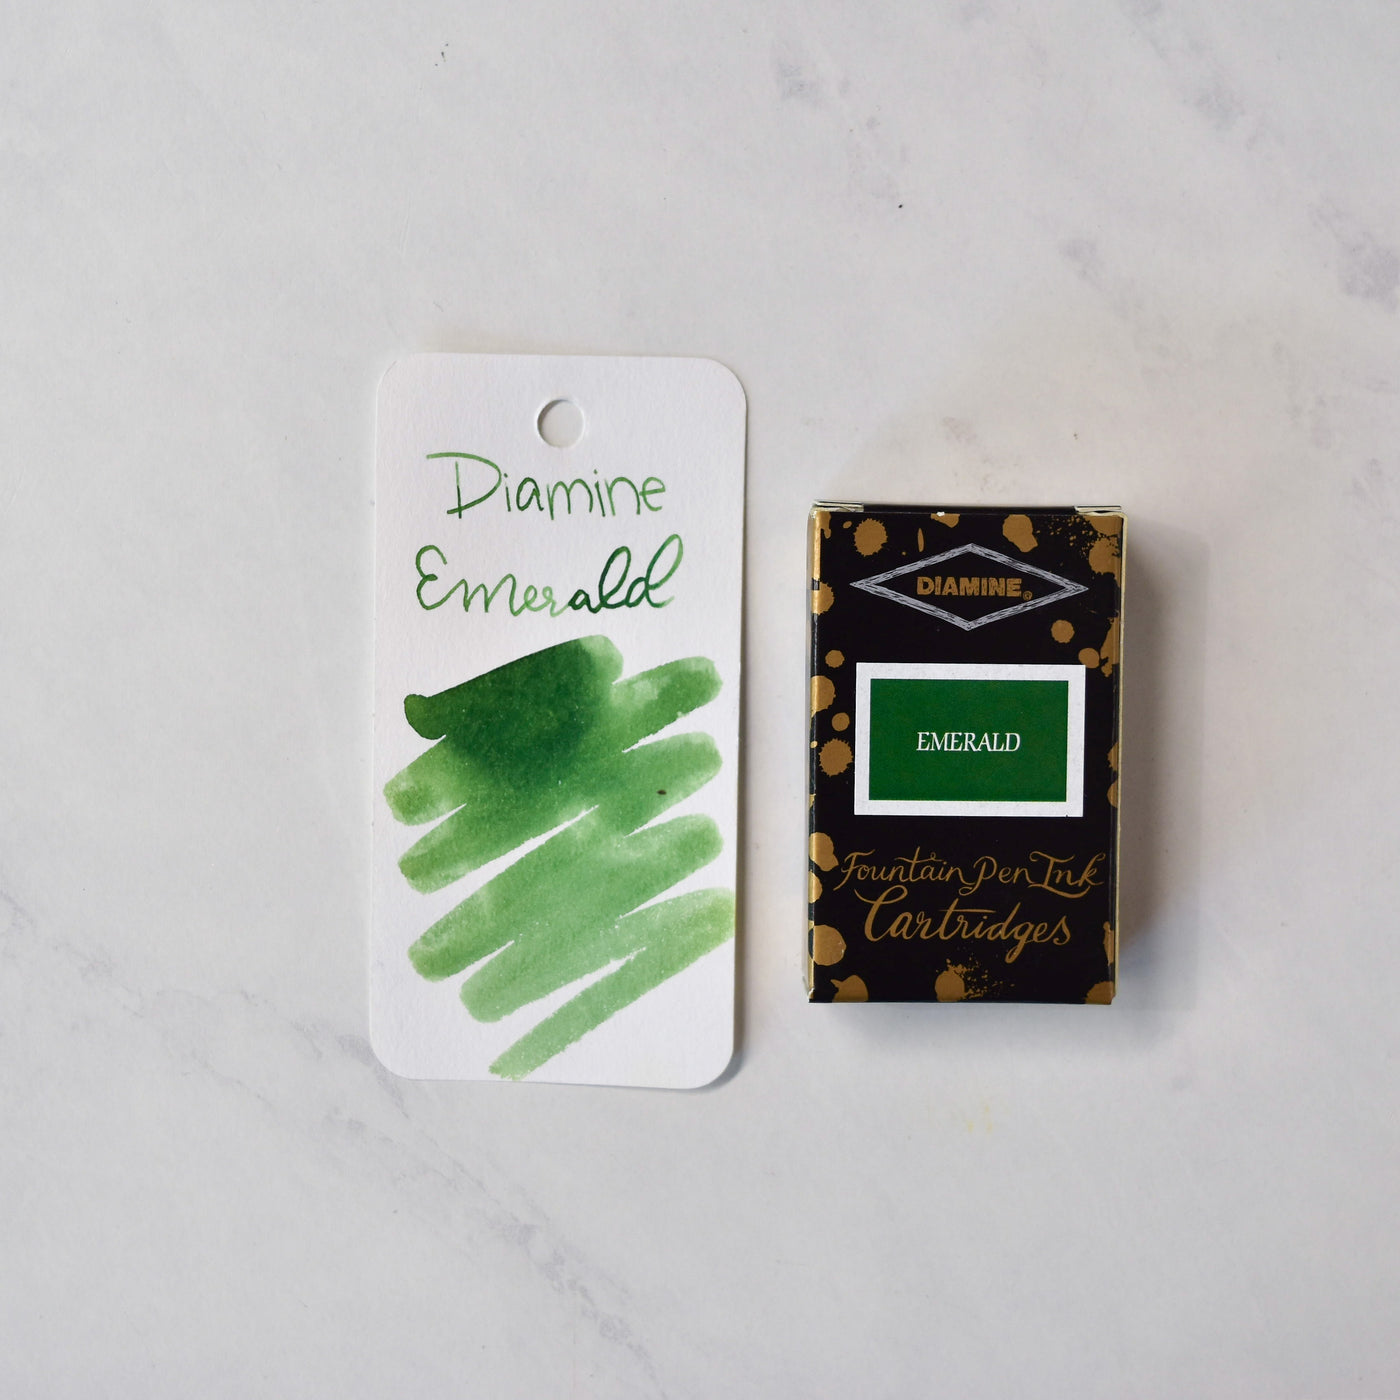 Diamine Emerald Green Ink Cartridges - Pack of 18